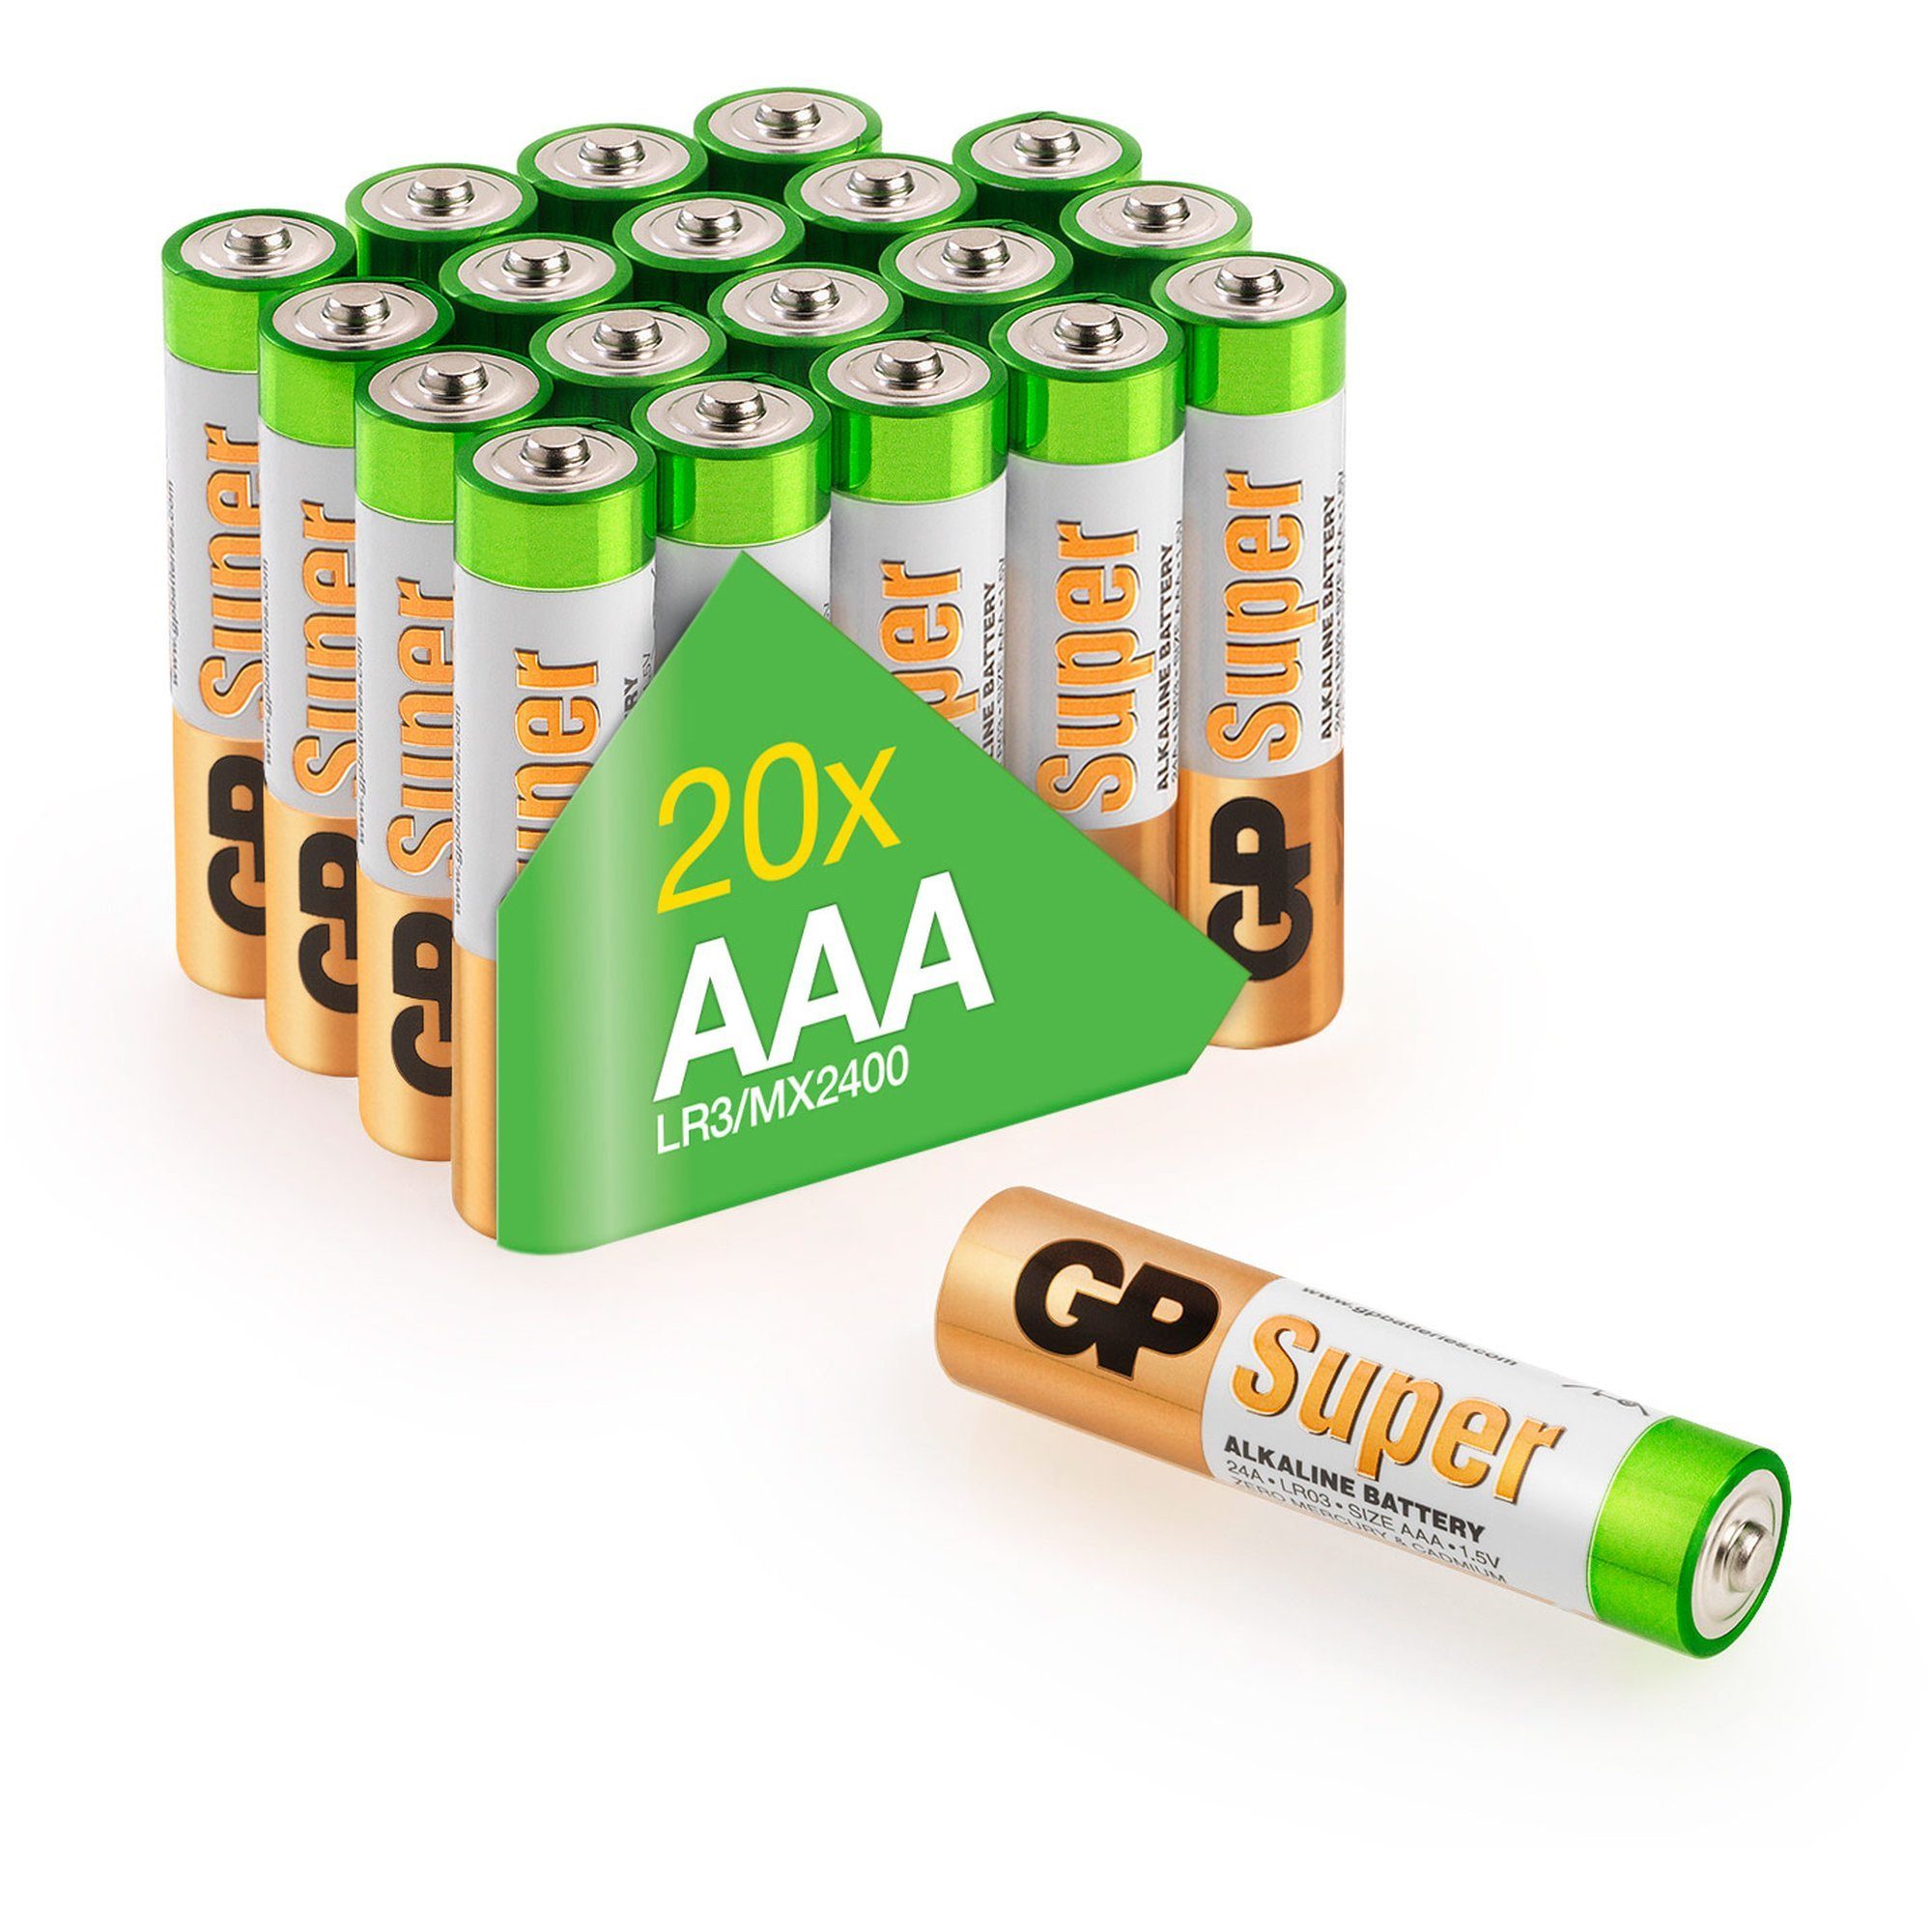 GP Batteries AAA Micro Batterie GP Alkaline Super 1,5V 20 Stück Batterie, (1,5 V)